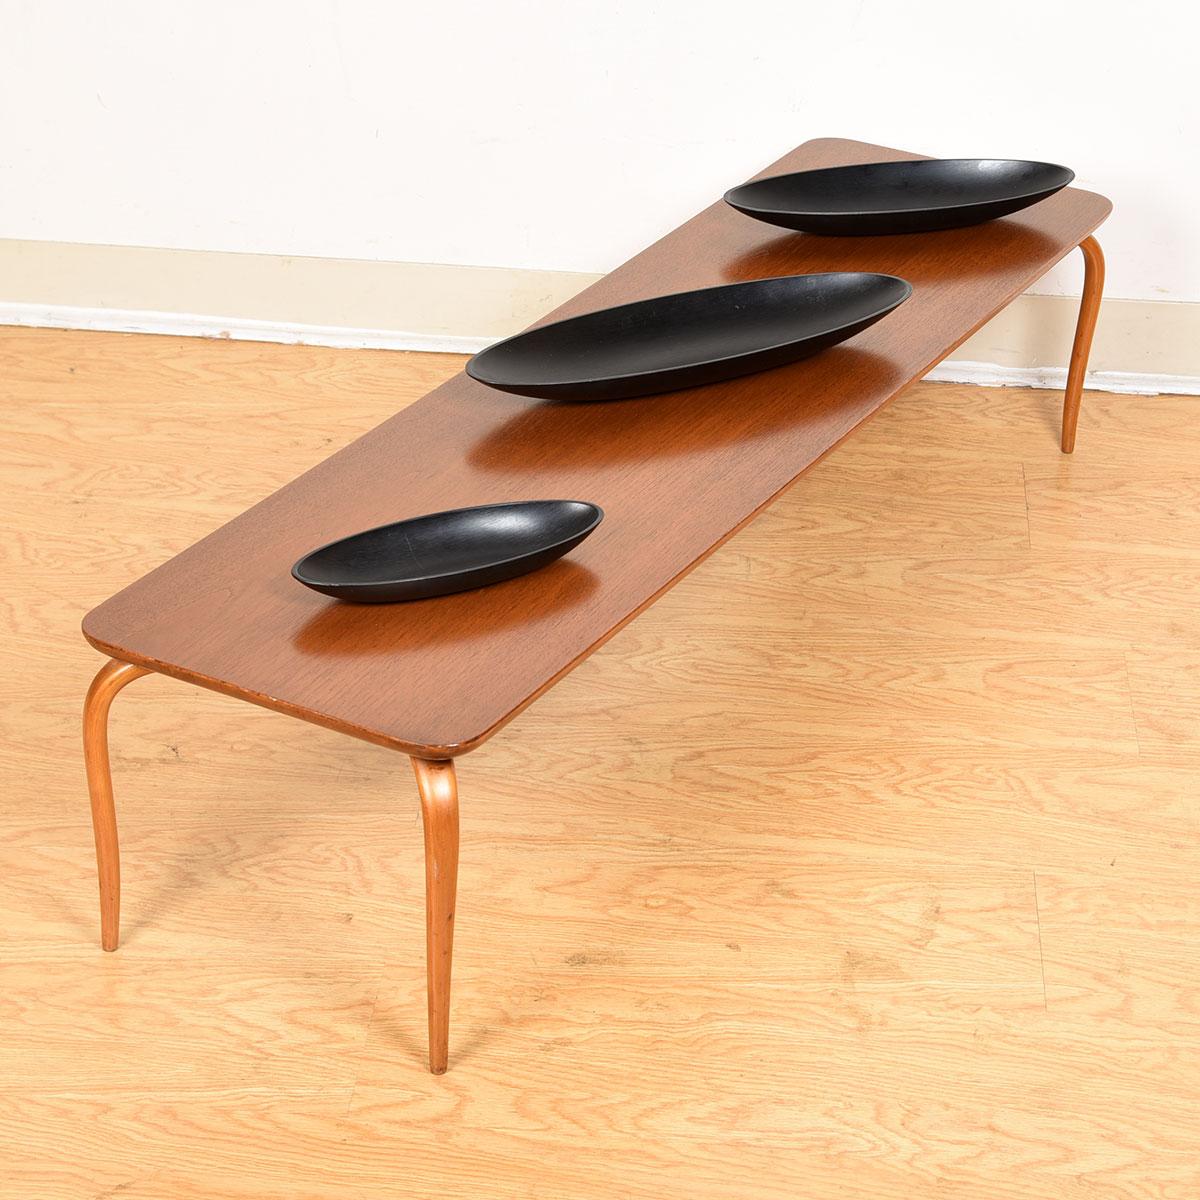 Teak ‘Long Table’ Swedish Modern Organic-Leg Coffee Table by Bruno Mathsson, 1950s For Sale